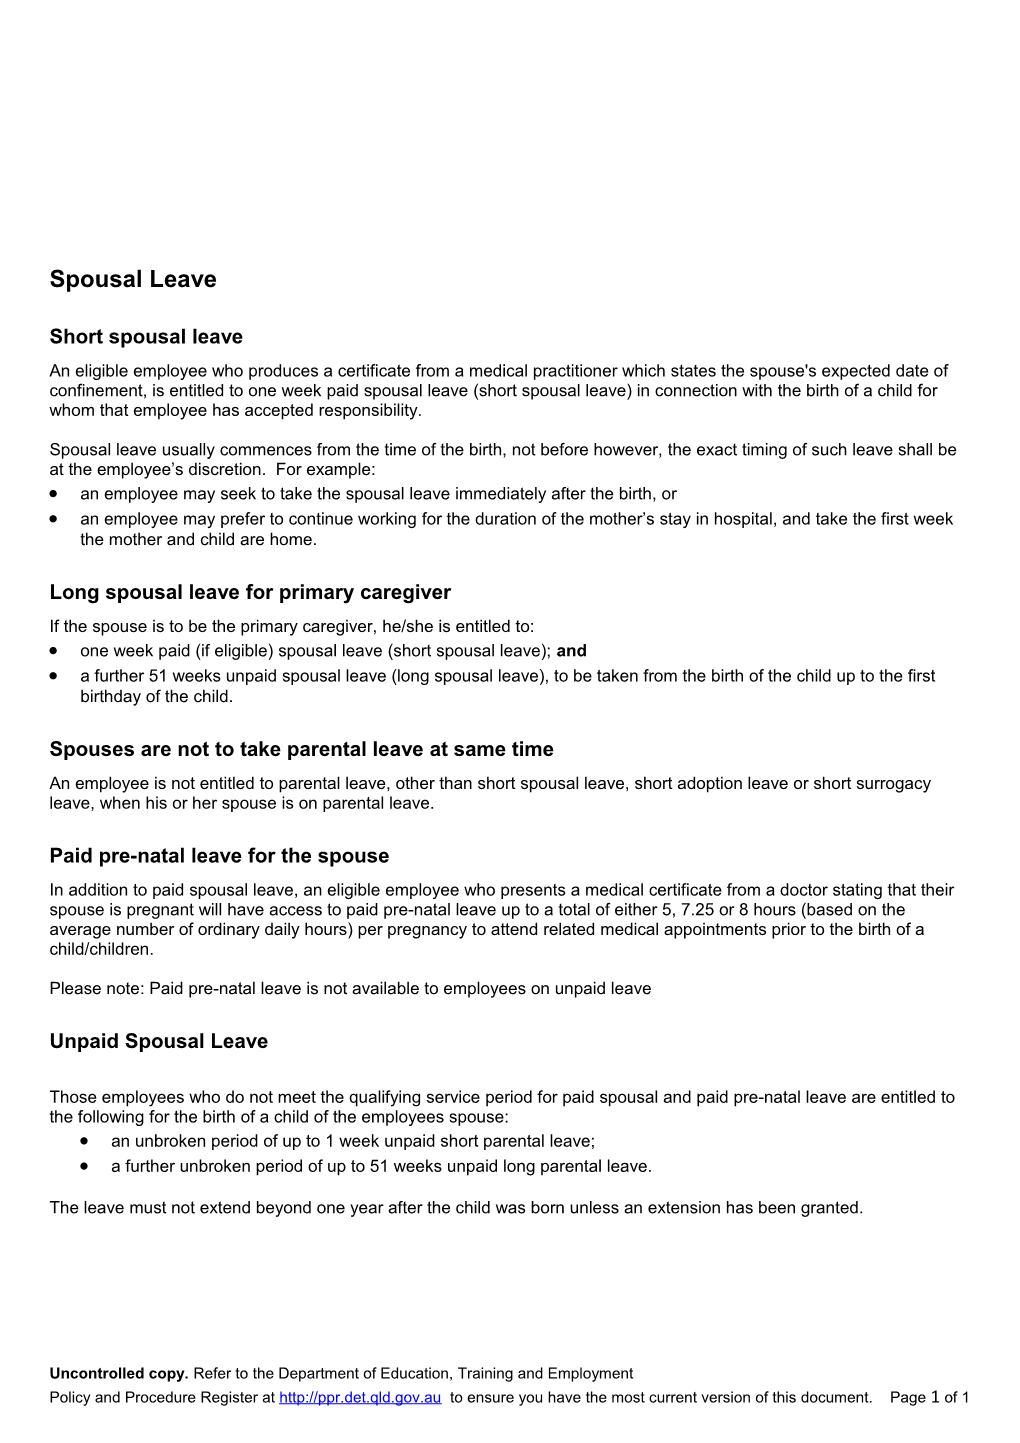 Spousal Leave Information Sheet